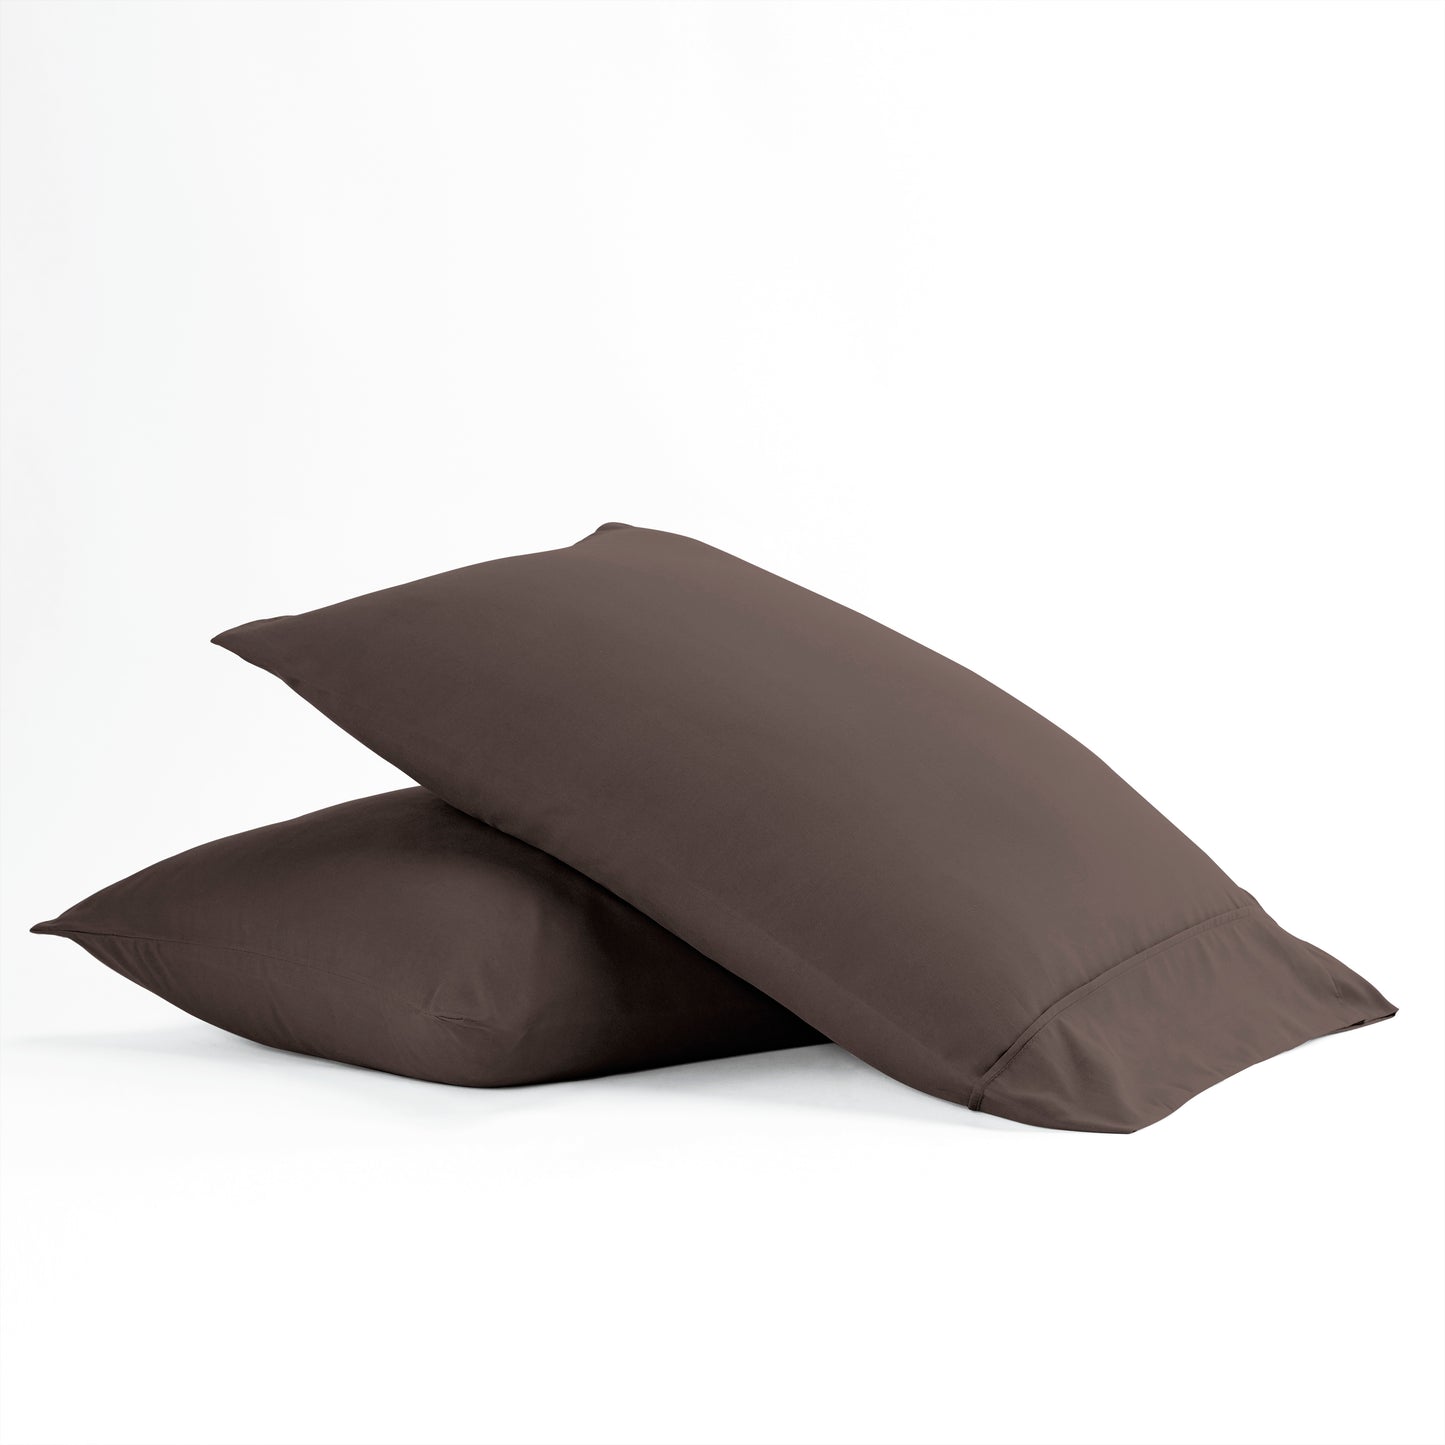 Pillowcase 2-Pack Microfiber Ultra Soft Bedding